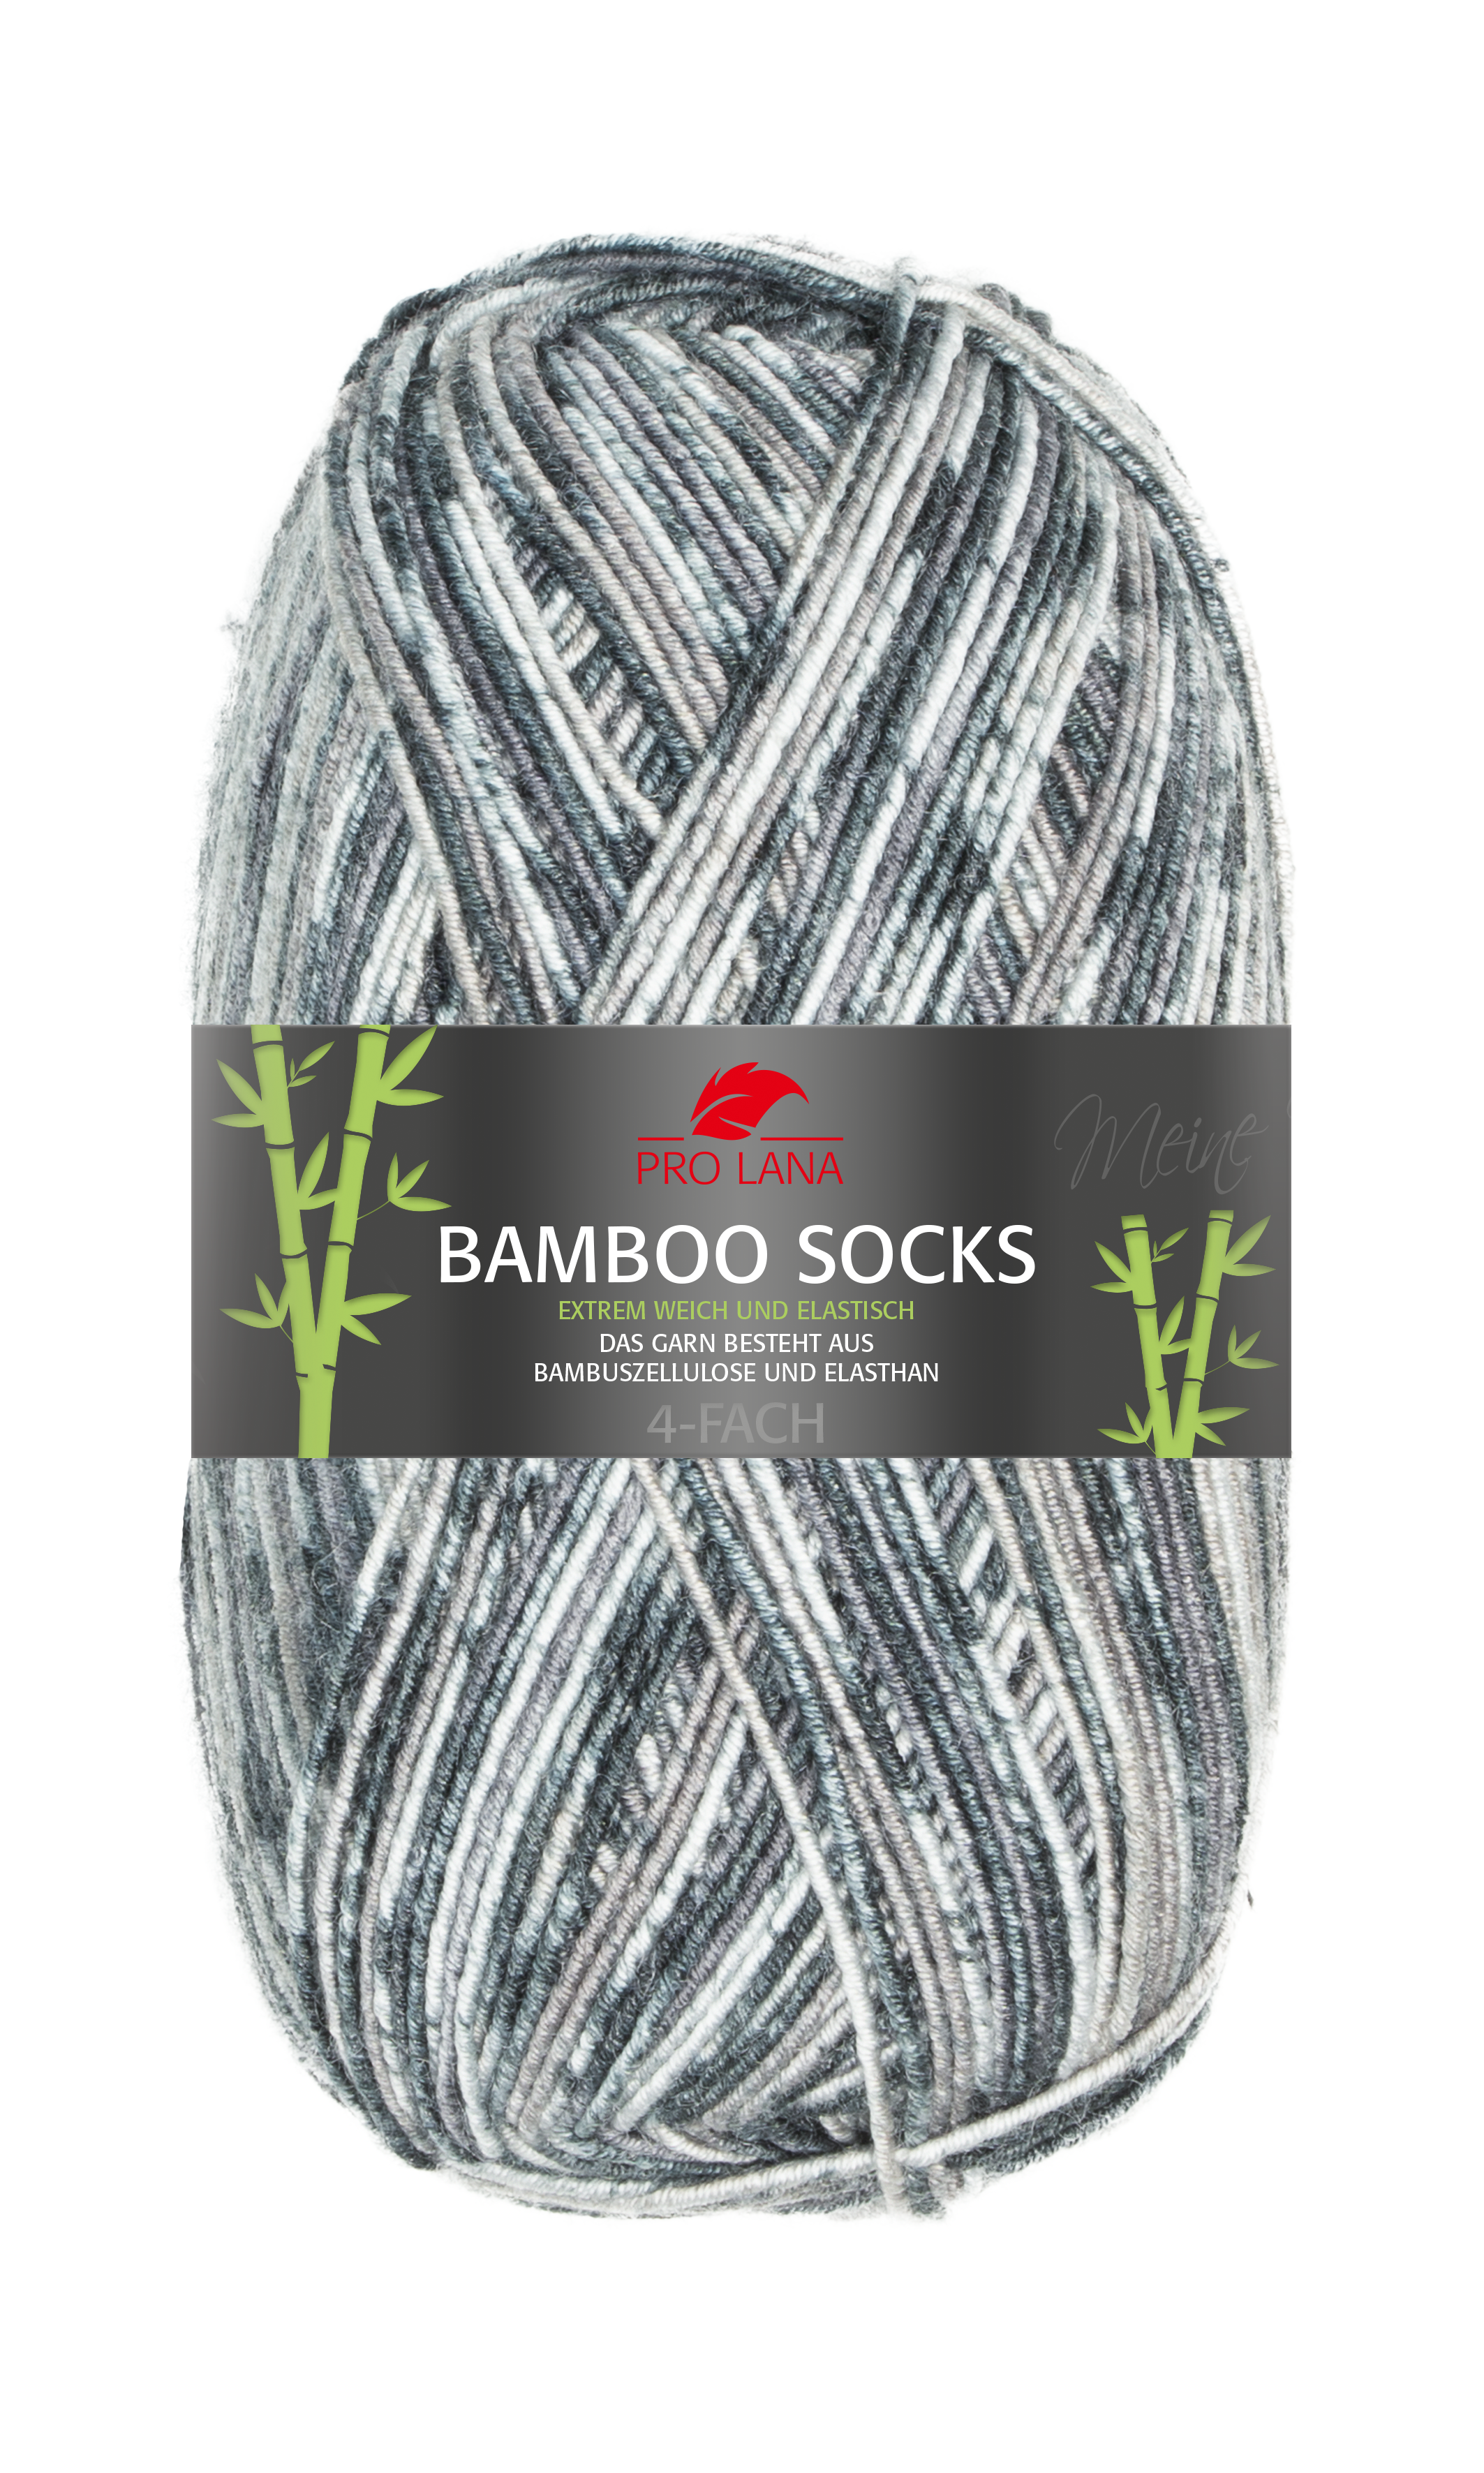 Bamboo Socks blau/grau meliert 